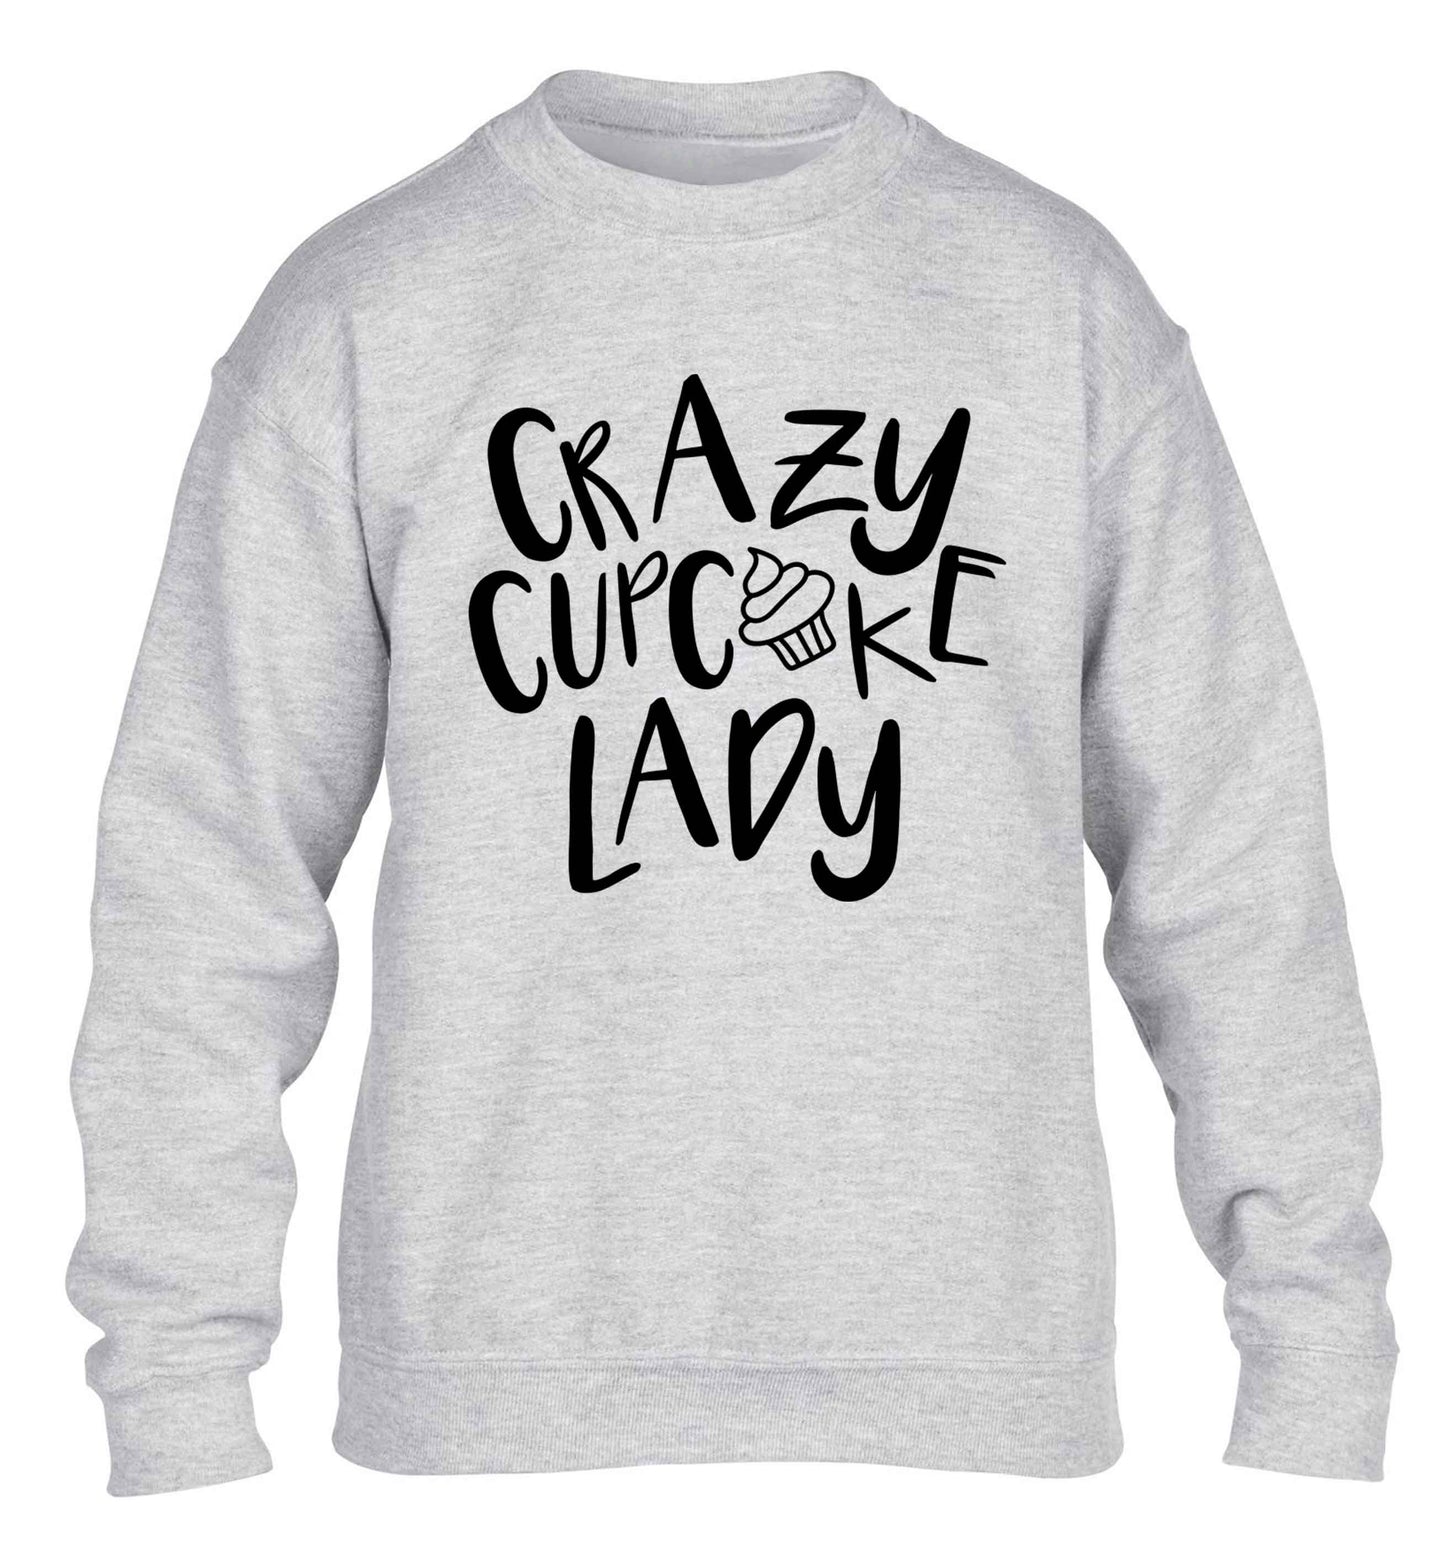 Crazy cupcake lady children's grey sweater 12-13 Years